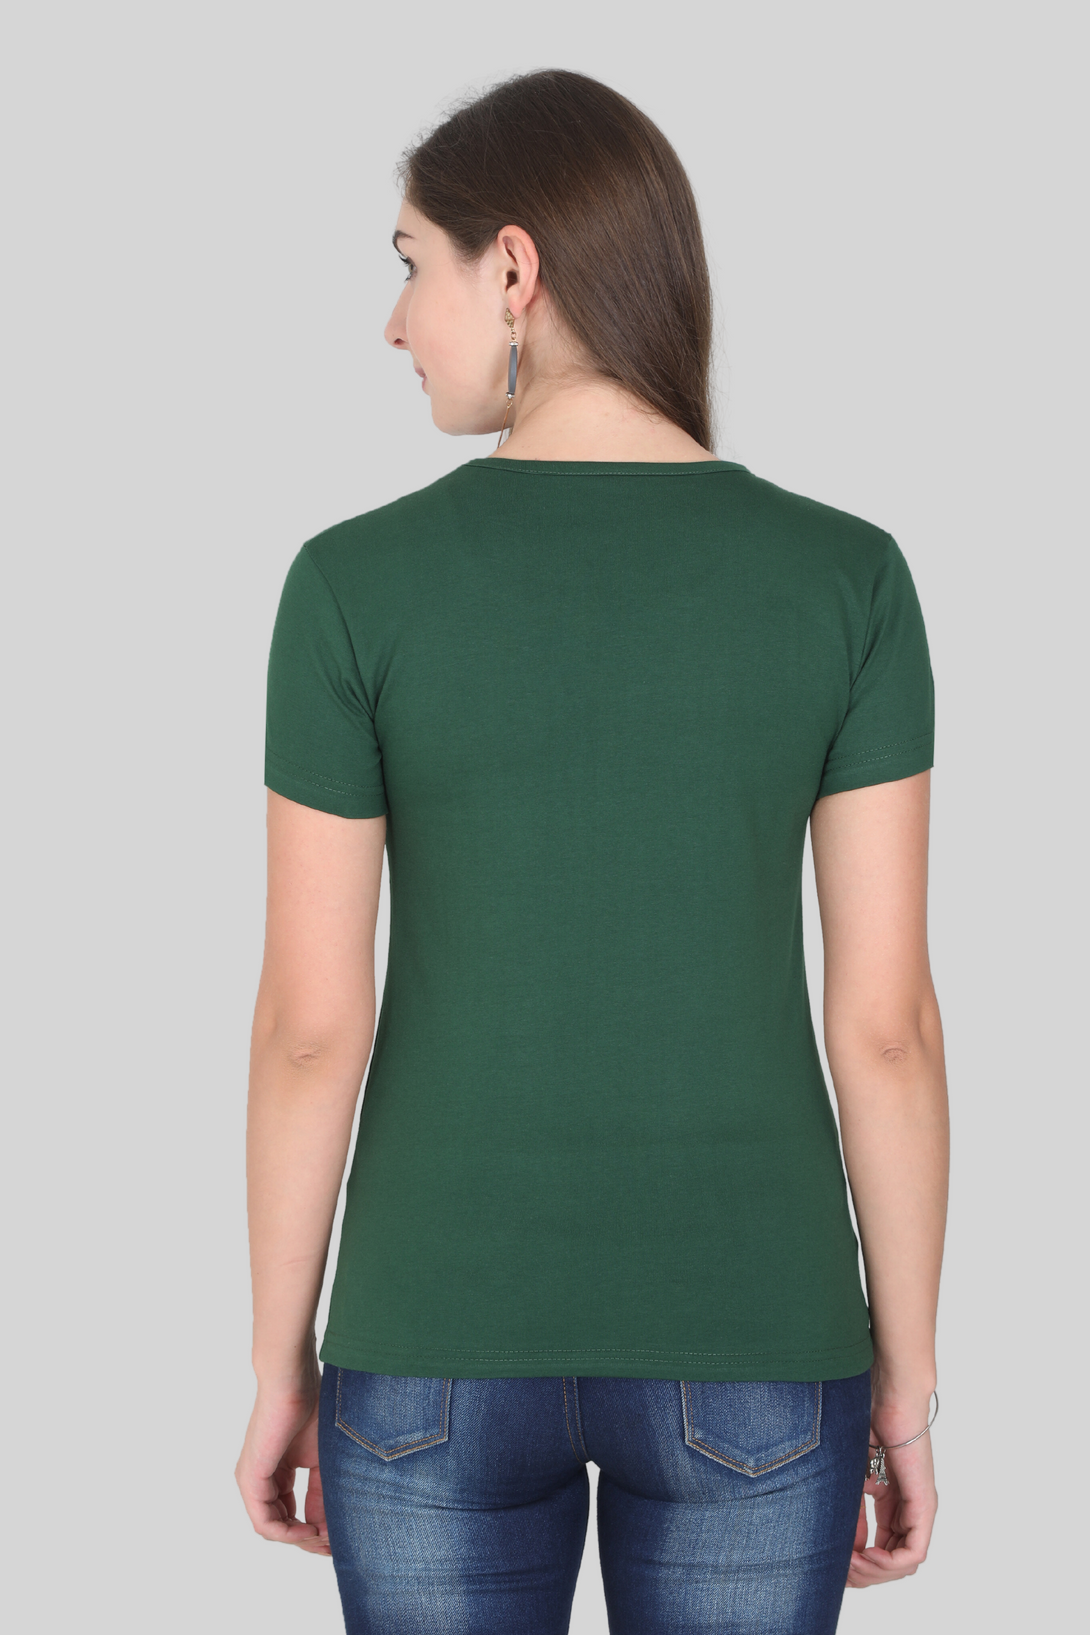 Bottle Green Scoop Neck T-Shirt For Women - WowWaves - 5